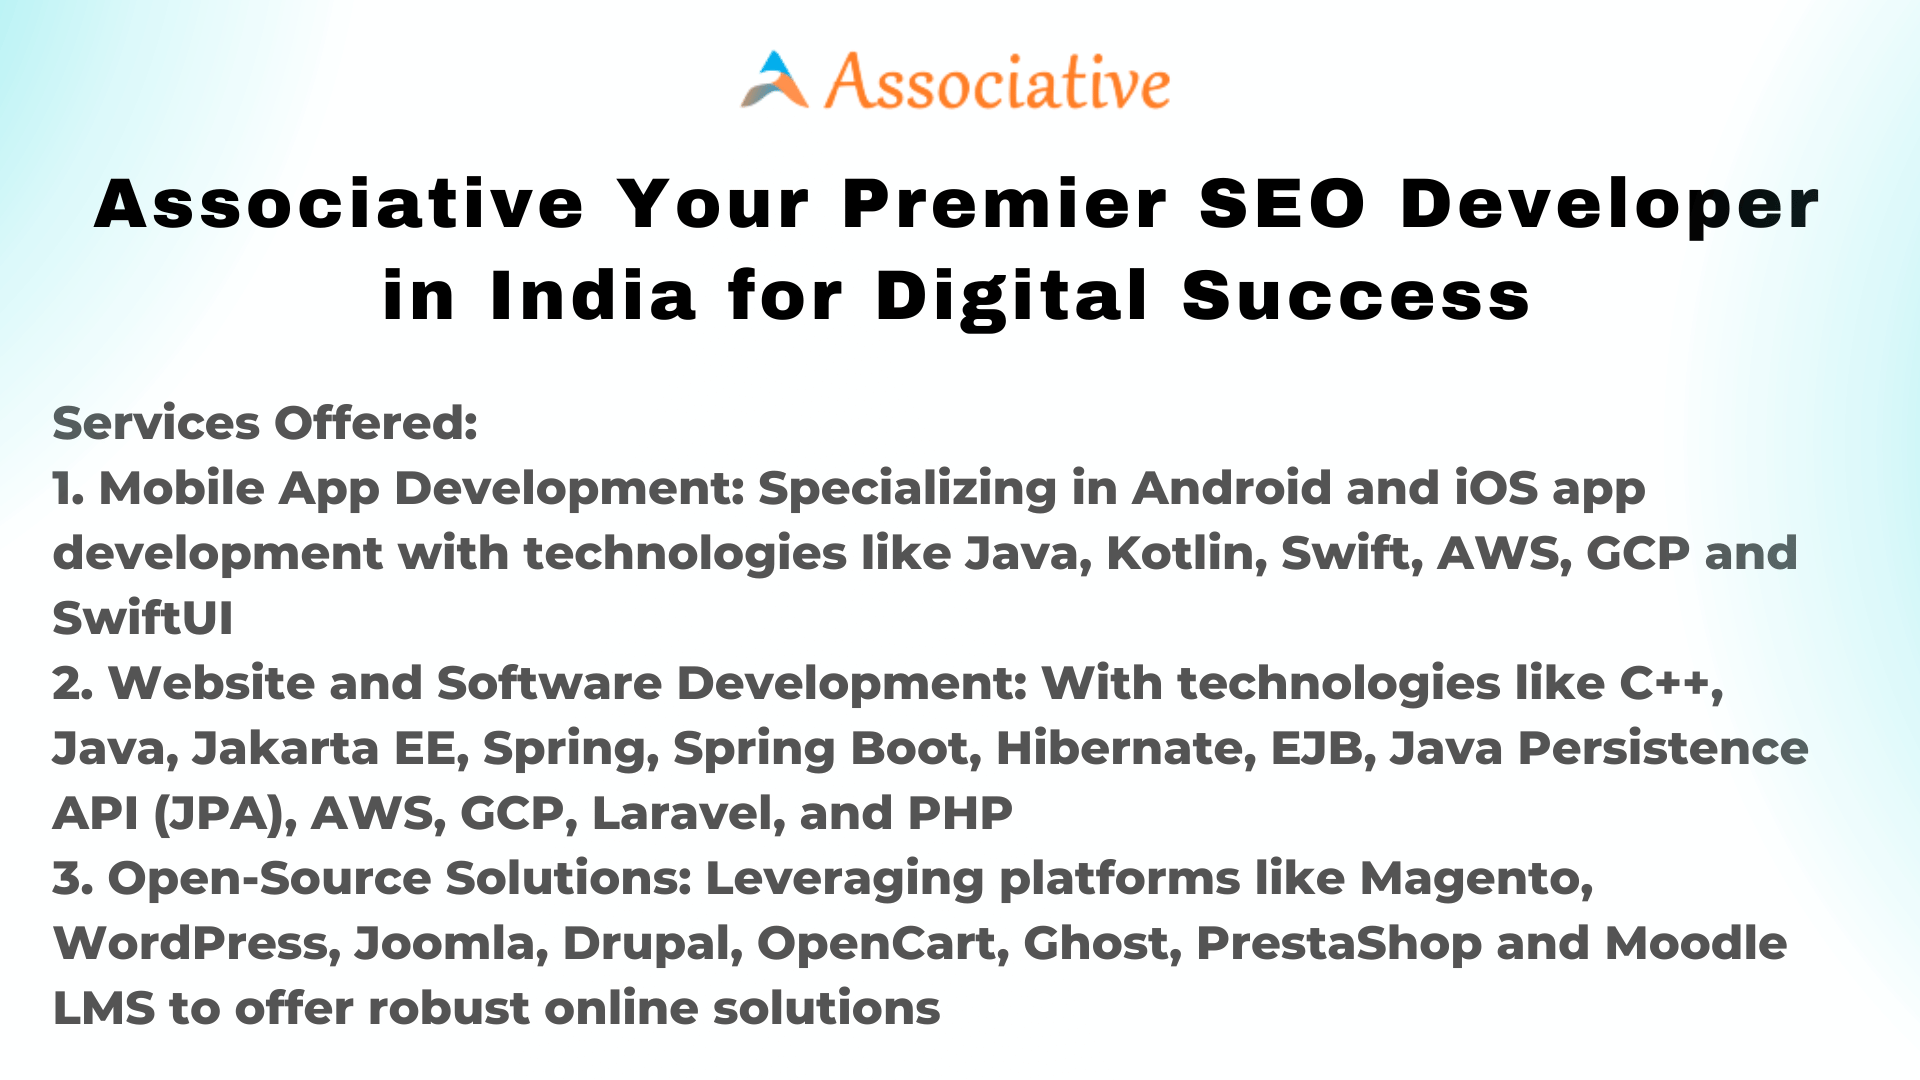 Associative Your Premier SEO Developer in India for Digital Success